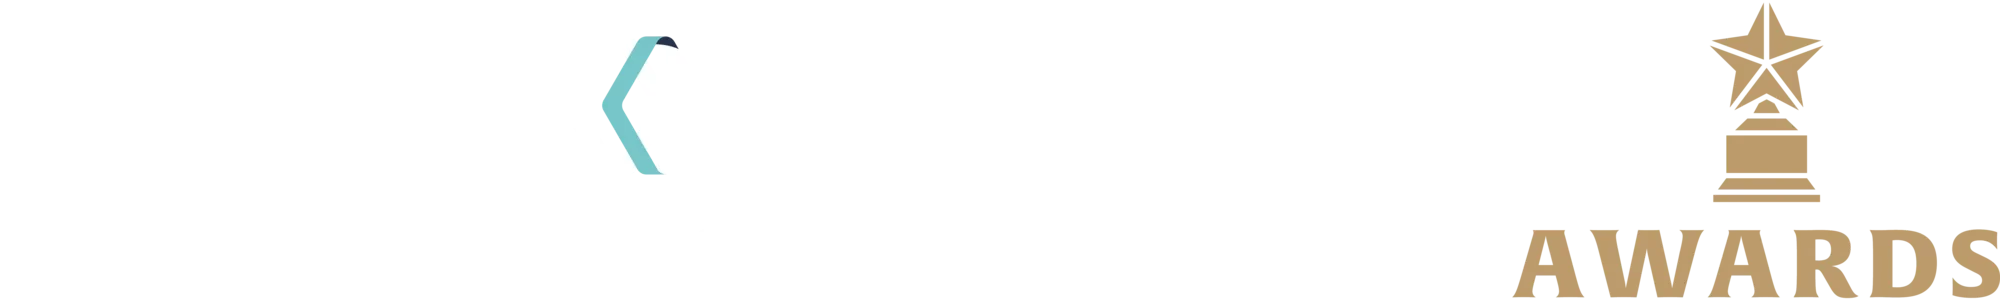 The Corporate Awards Logo